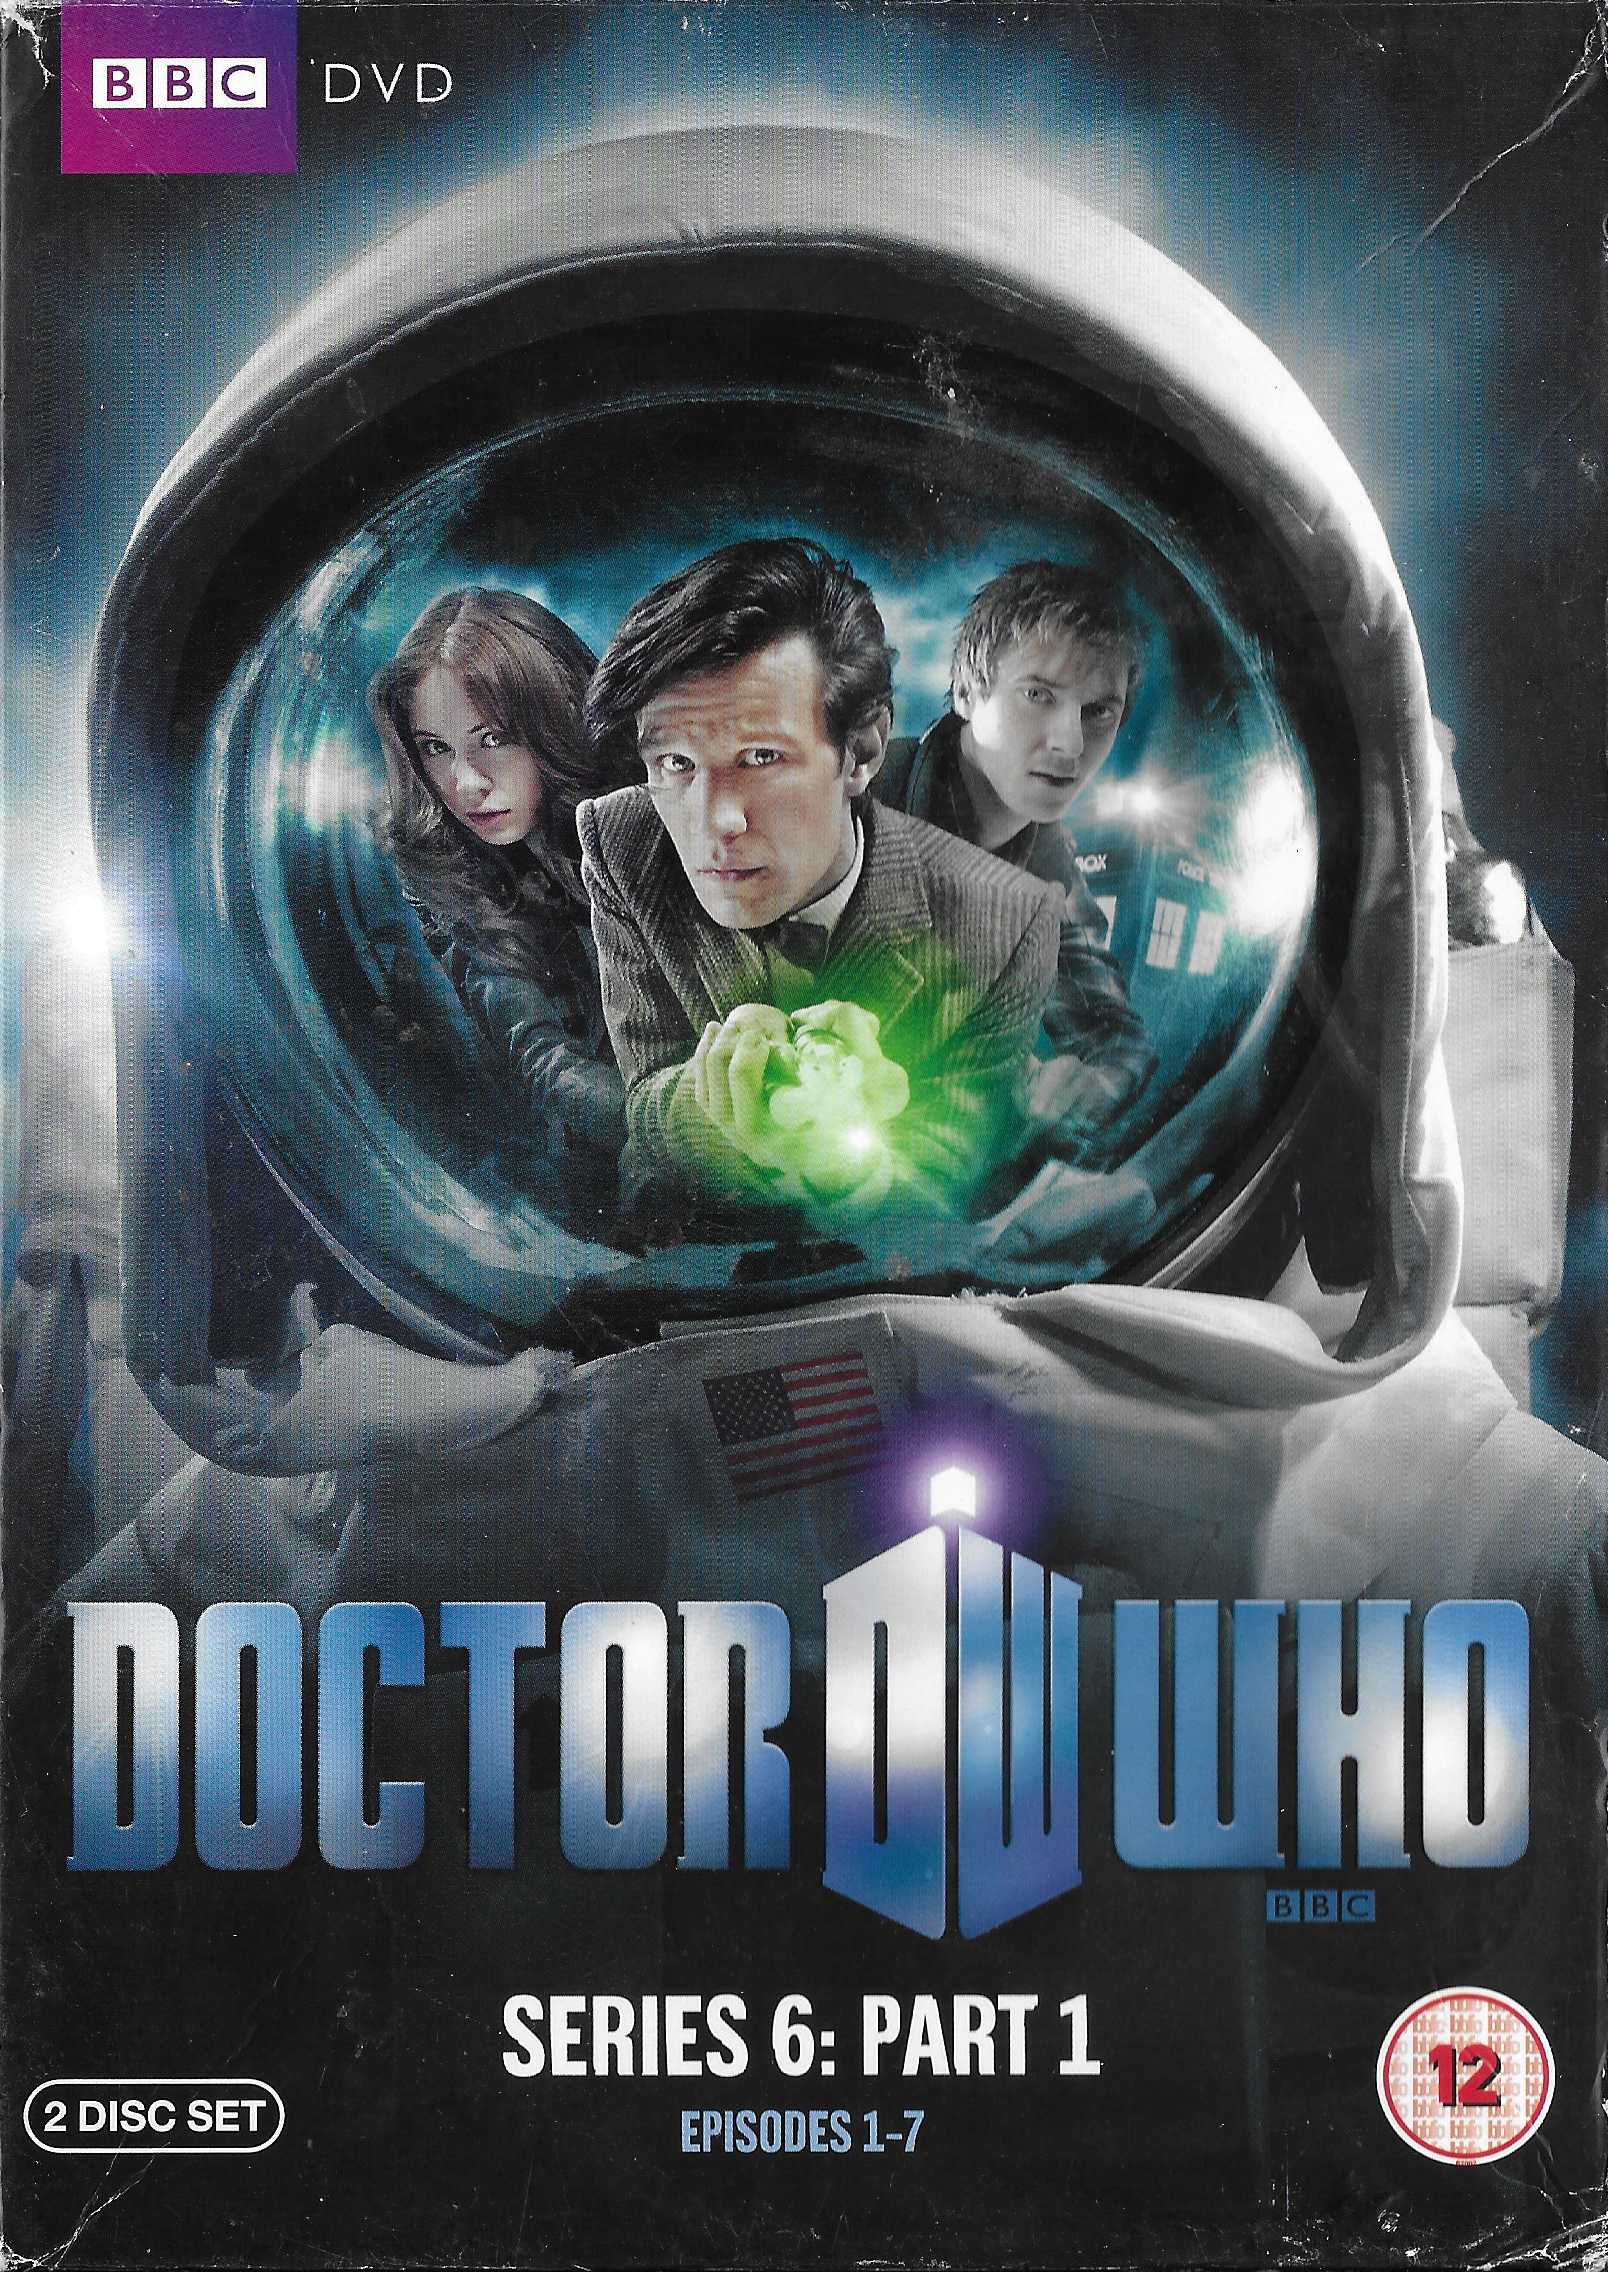 Picture of BBCDVD 3428 Doctor Who - Series 6, volume 1 by artist Steven Moffat / Stephen Thompson / Neil Gaiman / Matthew Graham